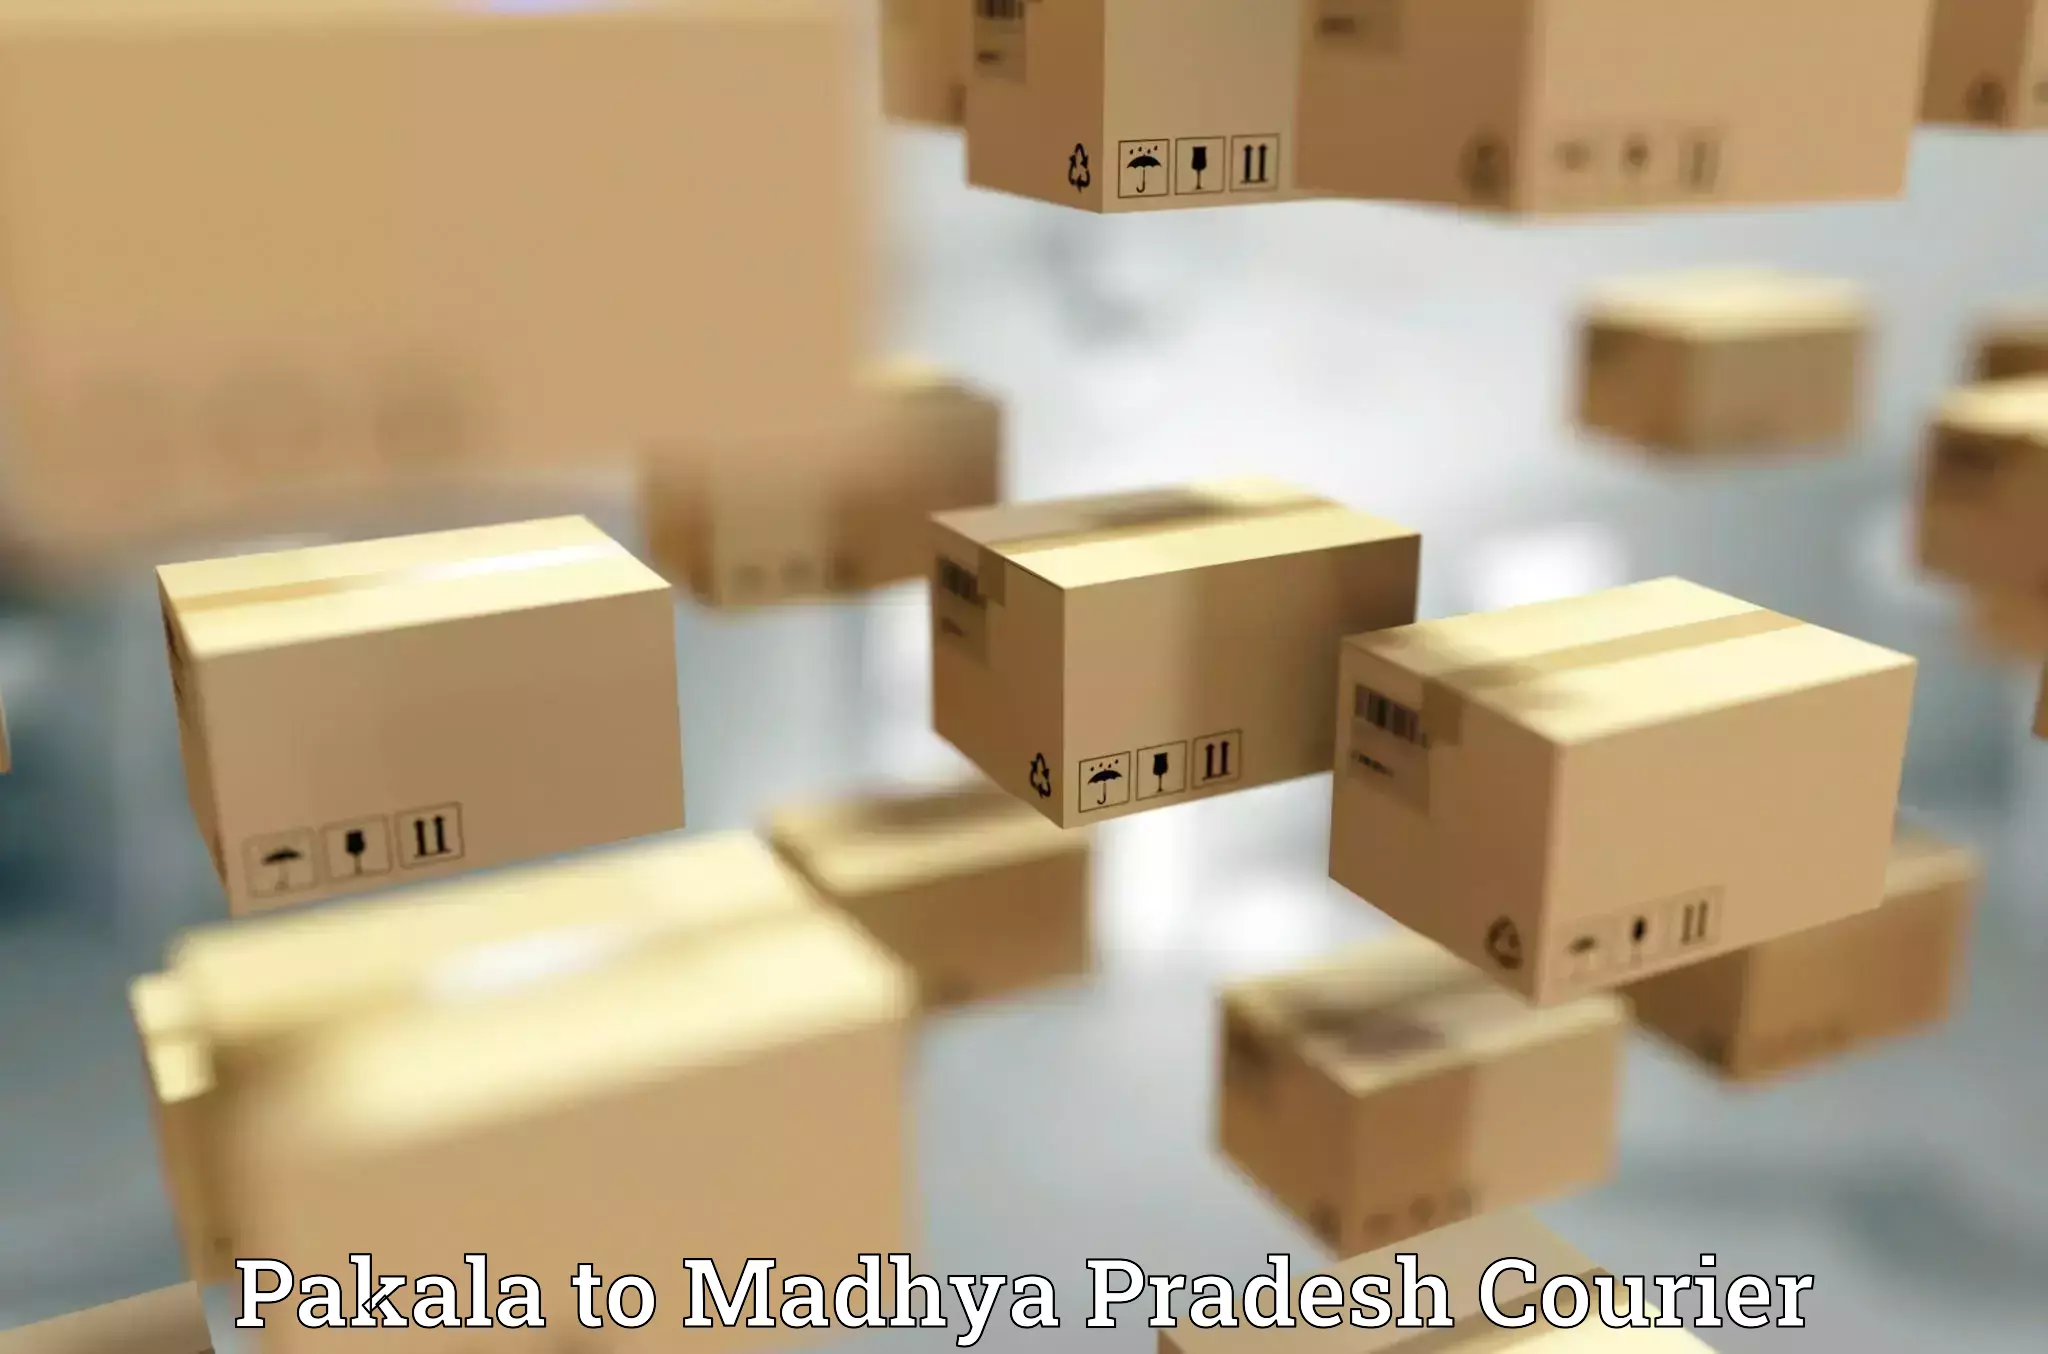 Logistics service provider Pakala to Madhya Pradesh